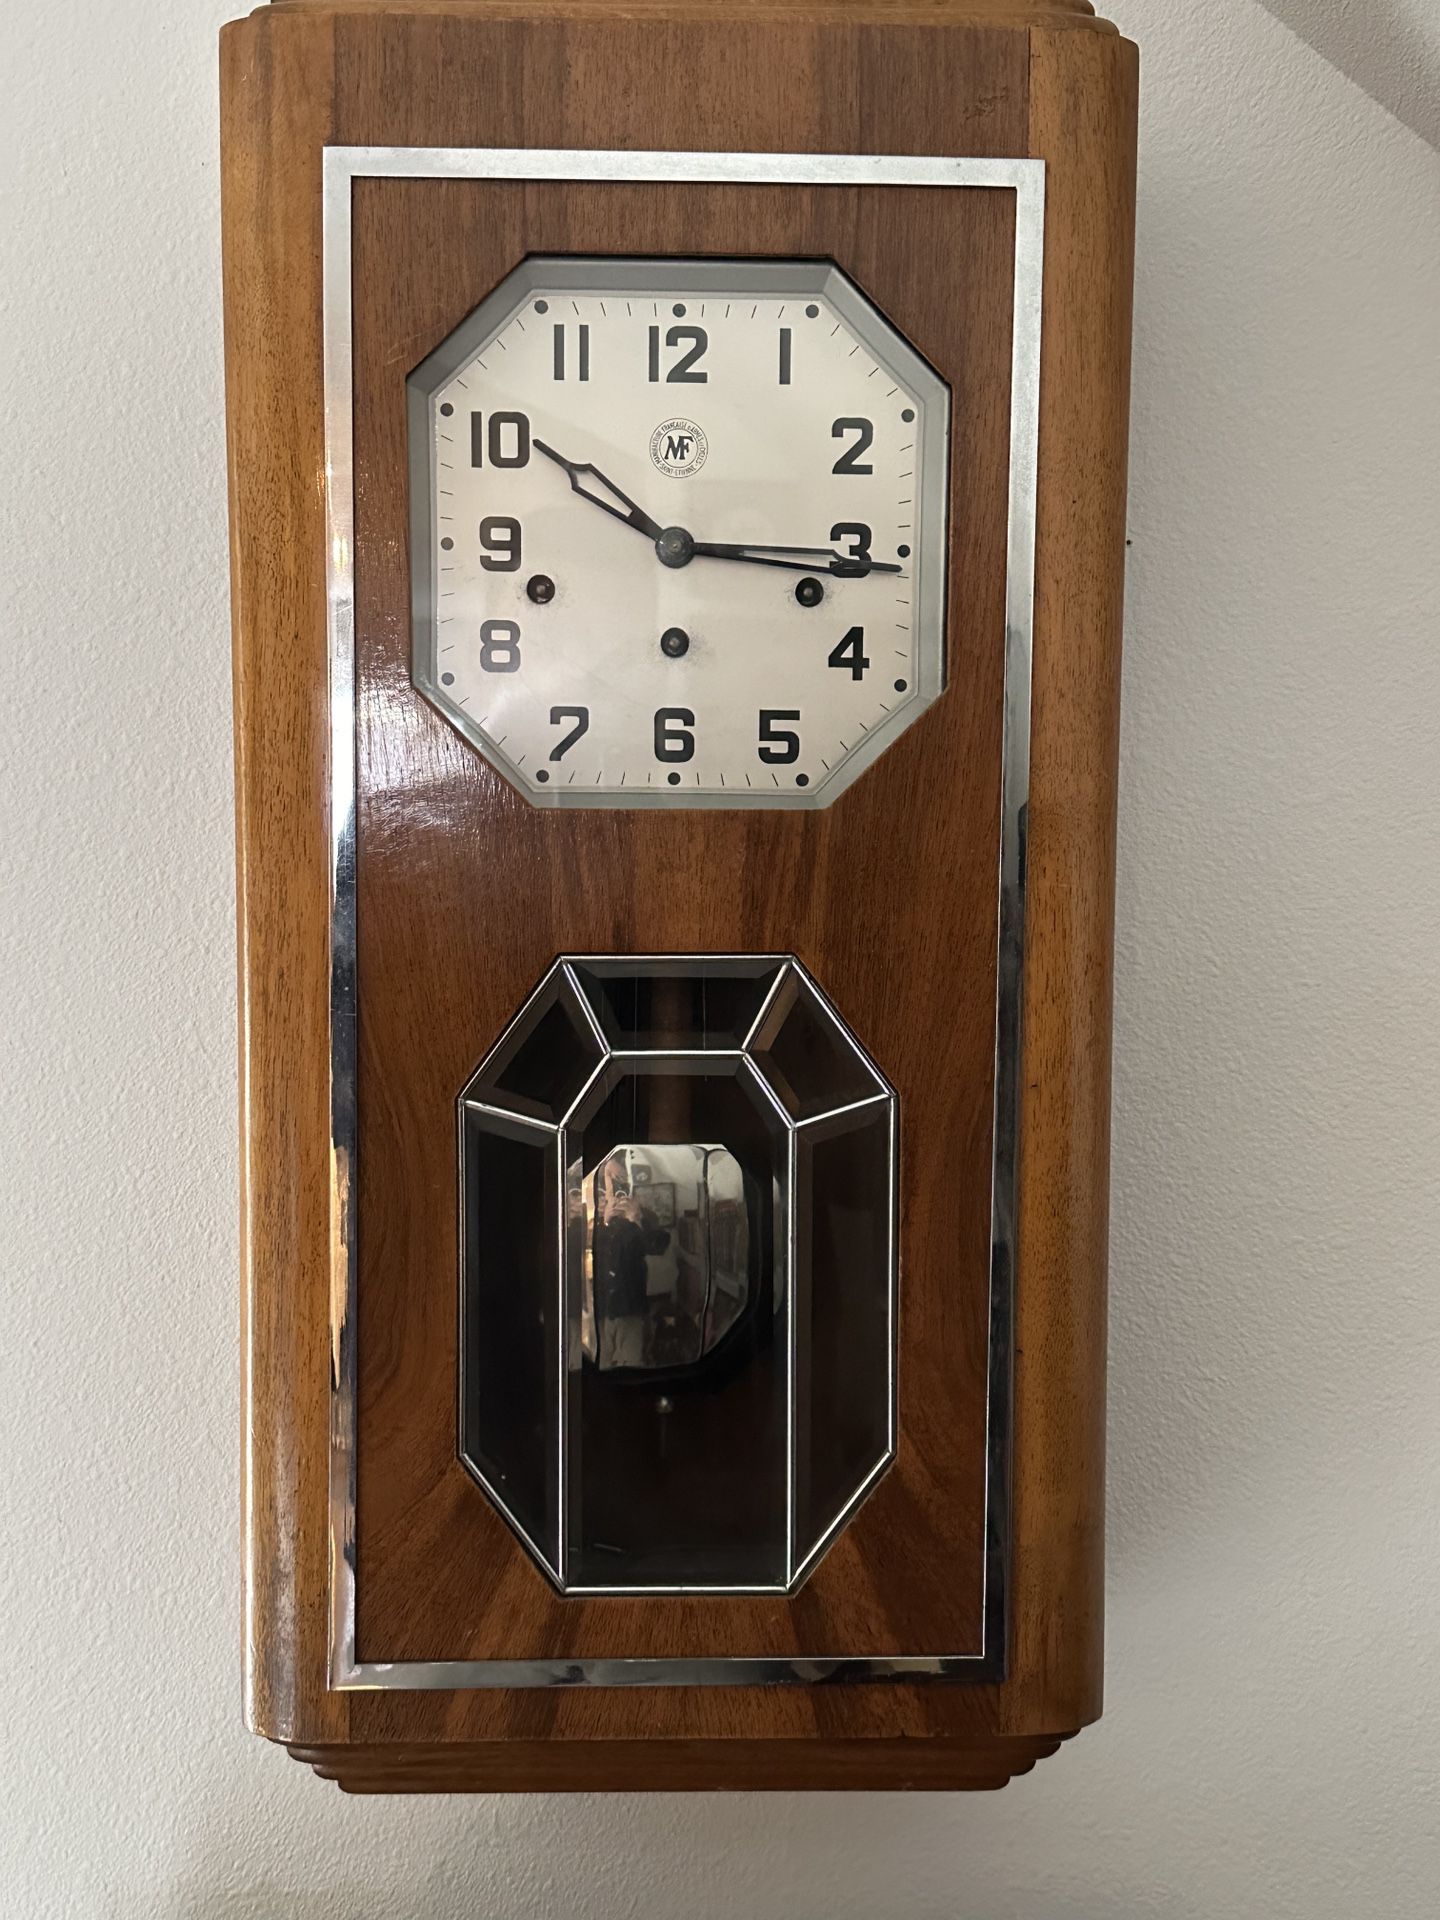 Rare 1936 French Art Deco Wall Clock w/ Chimes of Reynaldo Hahn